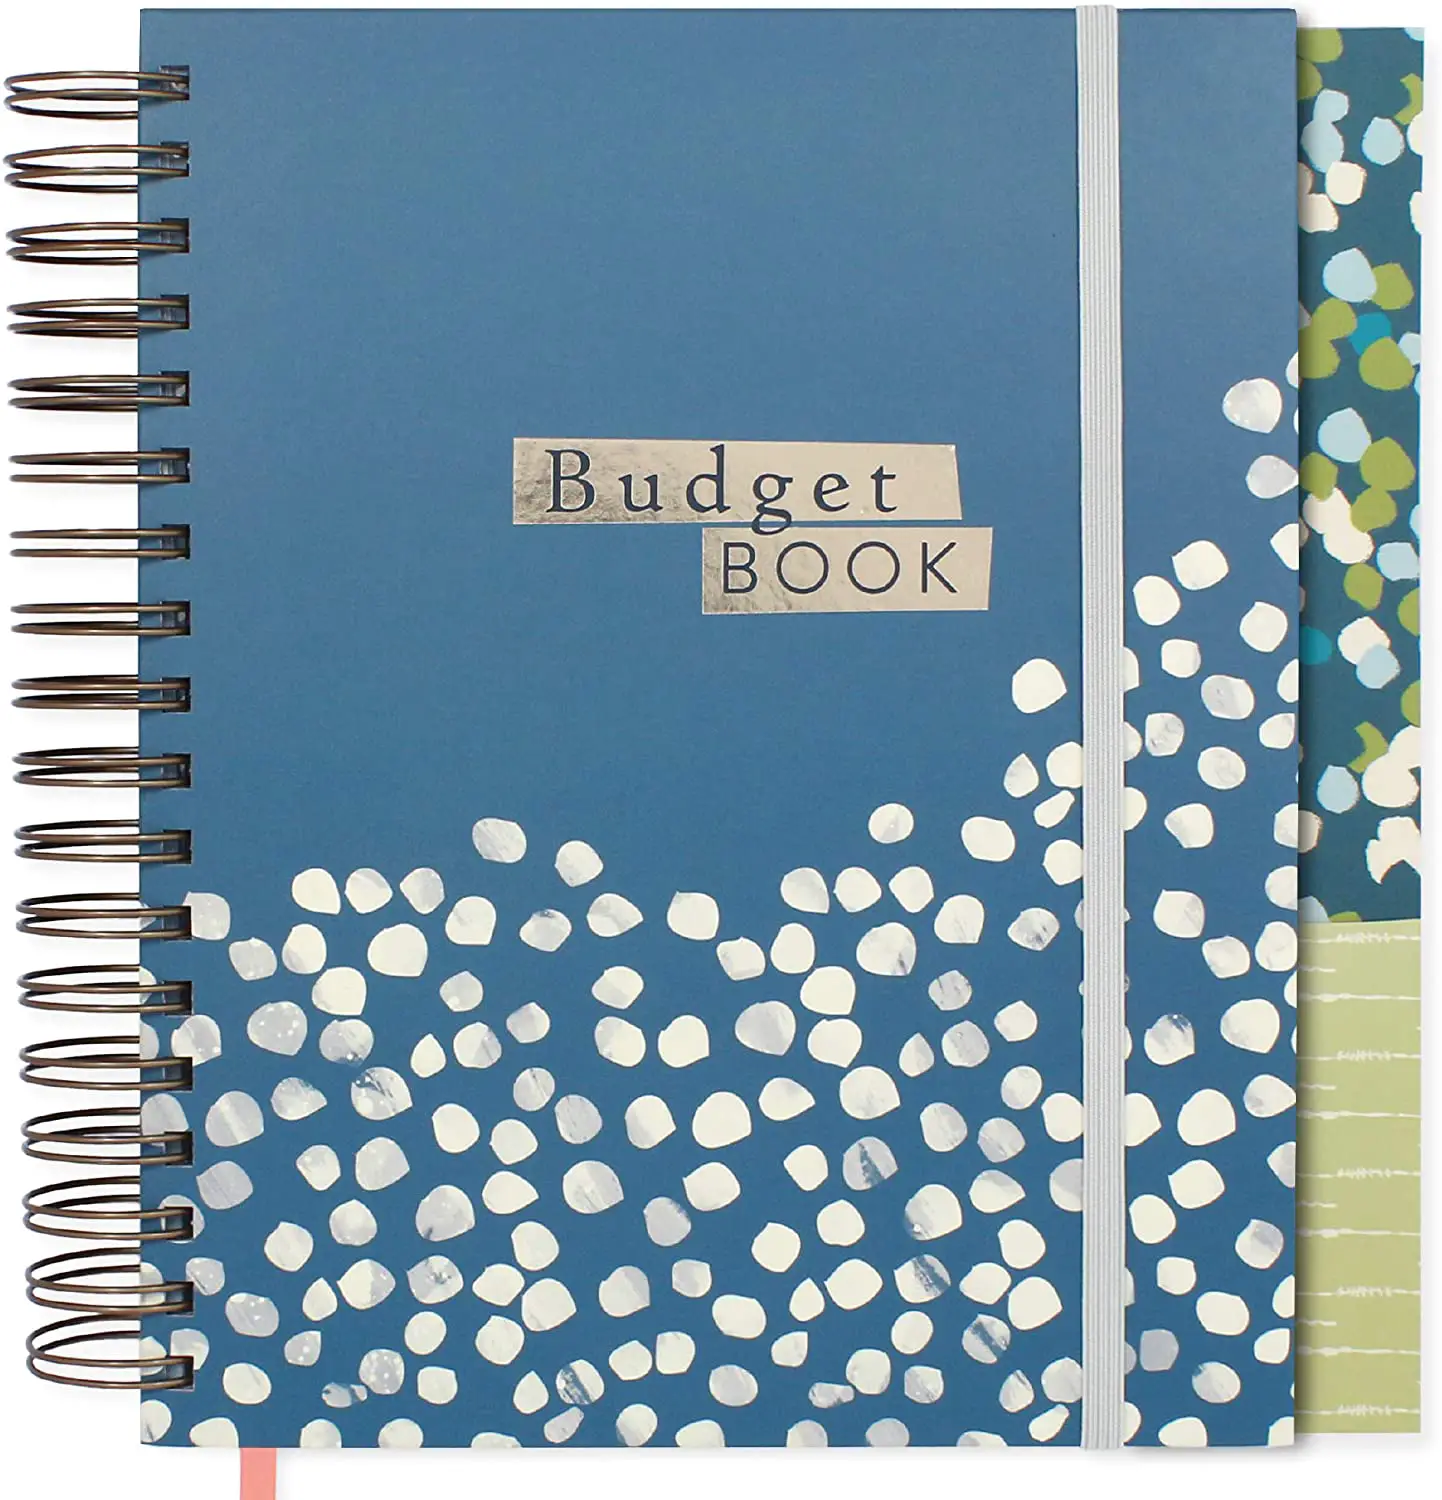 best budget planner notebook